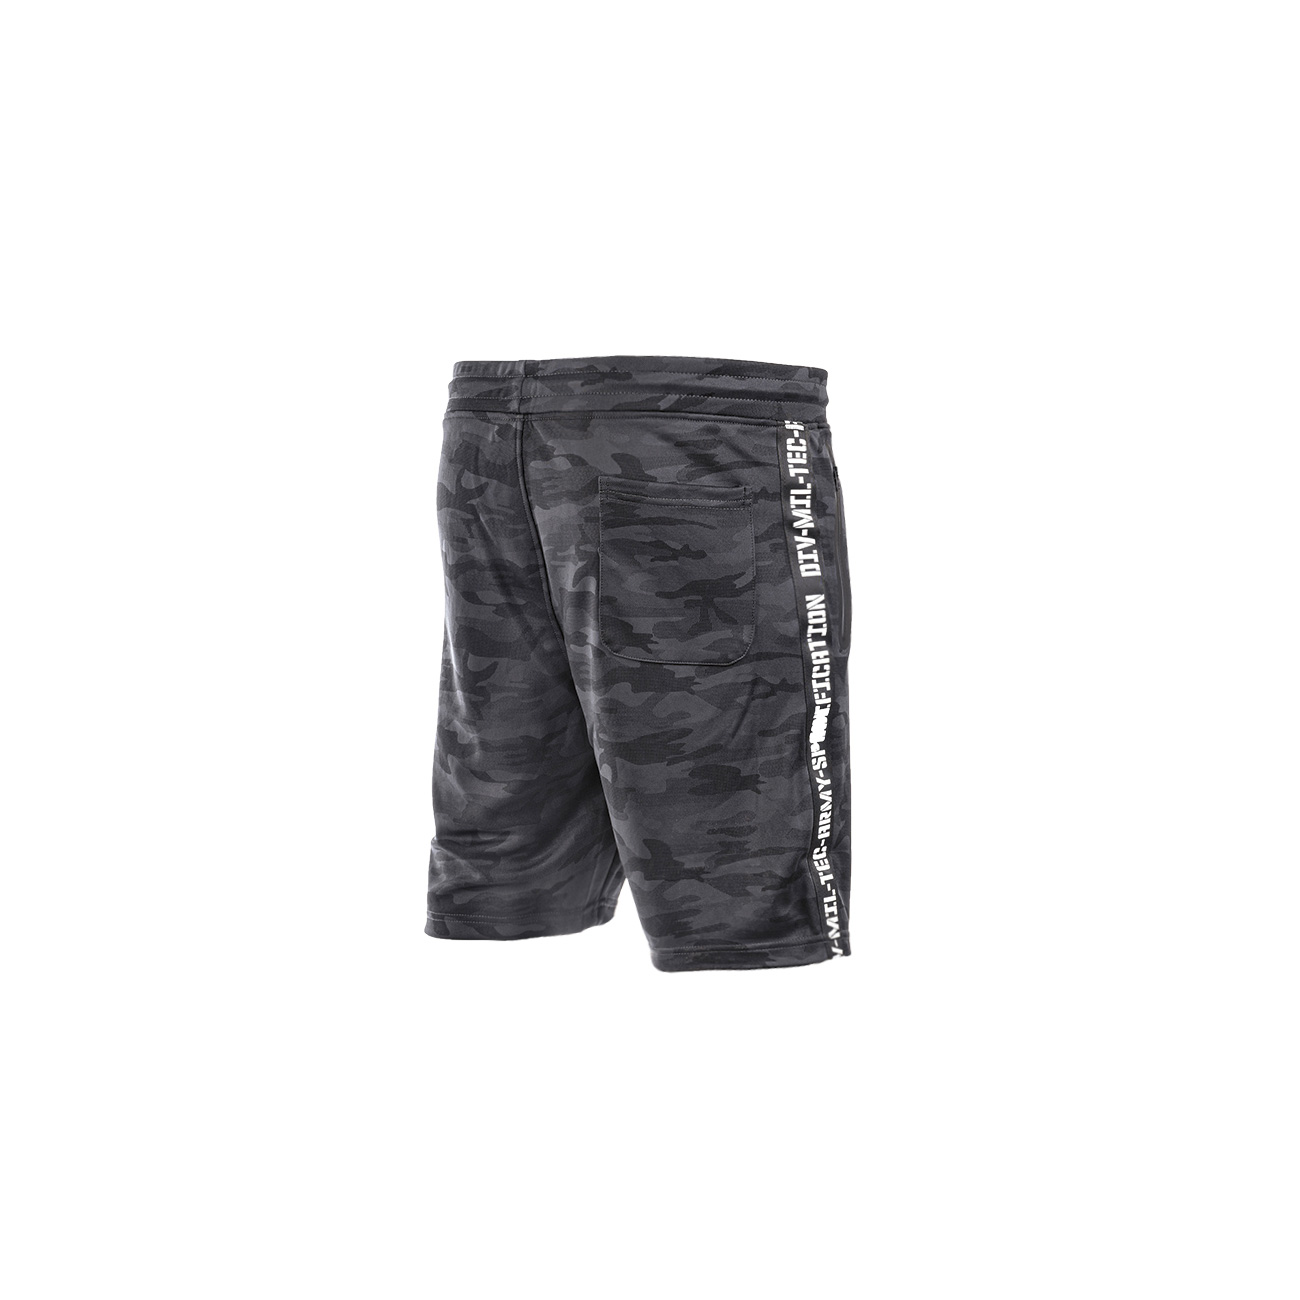 Mil-Tec Shorts Sweat Training Pants dark camo Bild 1